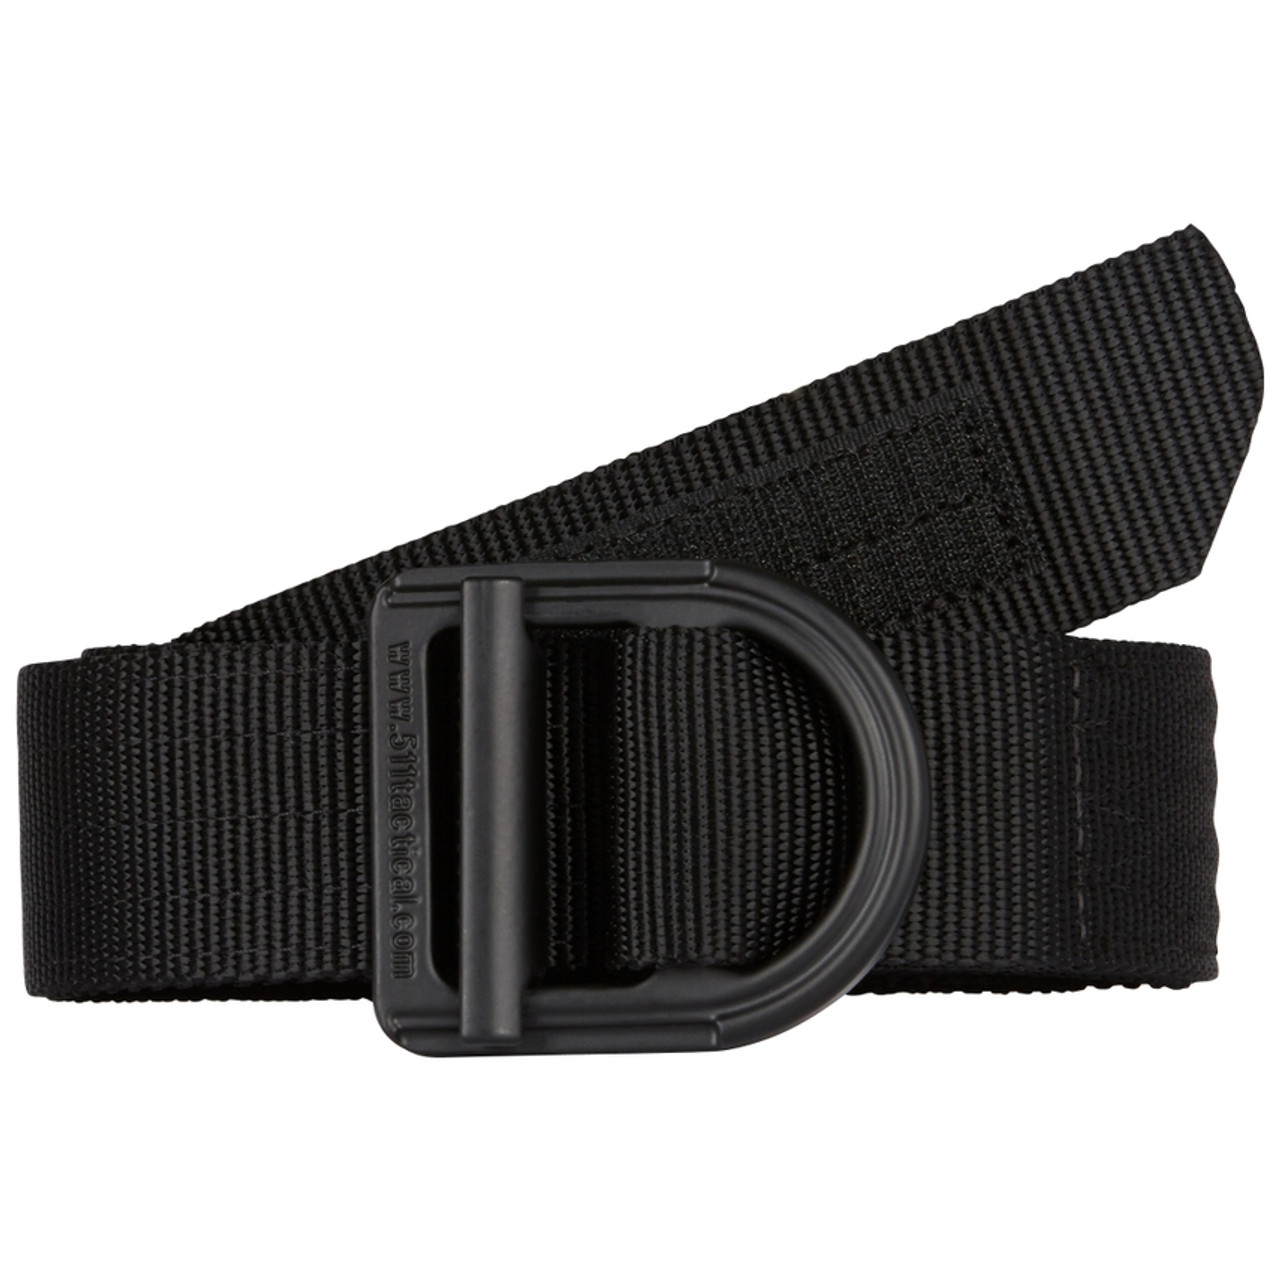 1.5" Trainer Belt